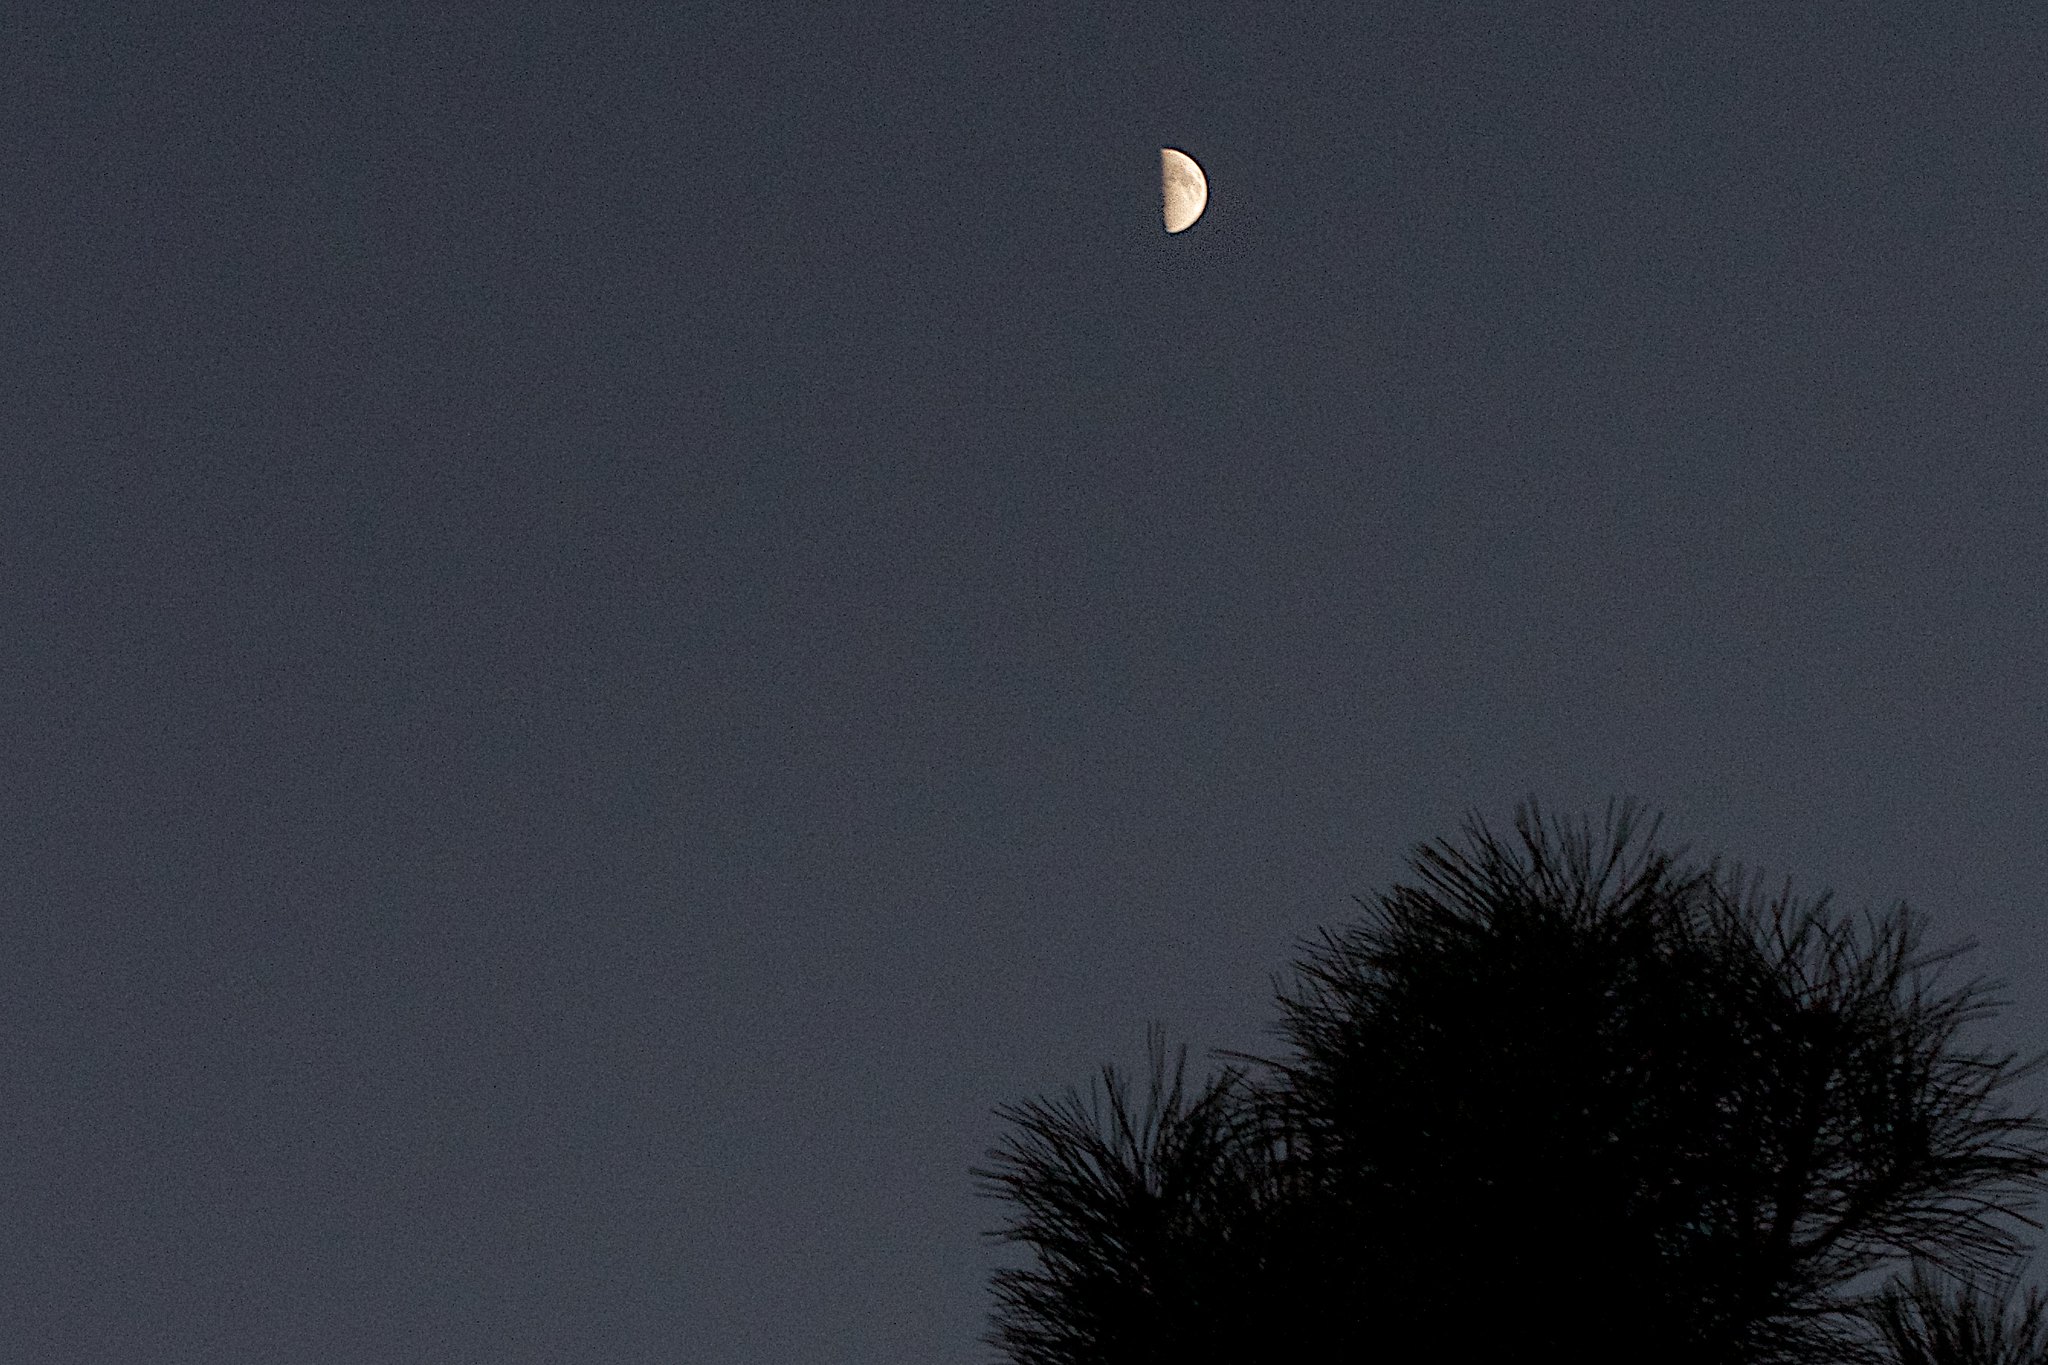 Half Moon Over Pine Tree | Flickr - Photo Sharing!